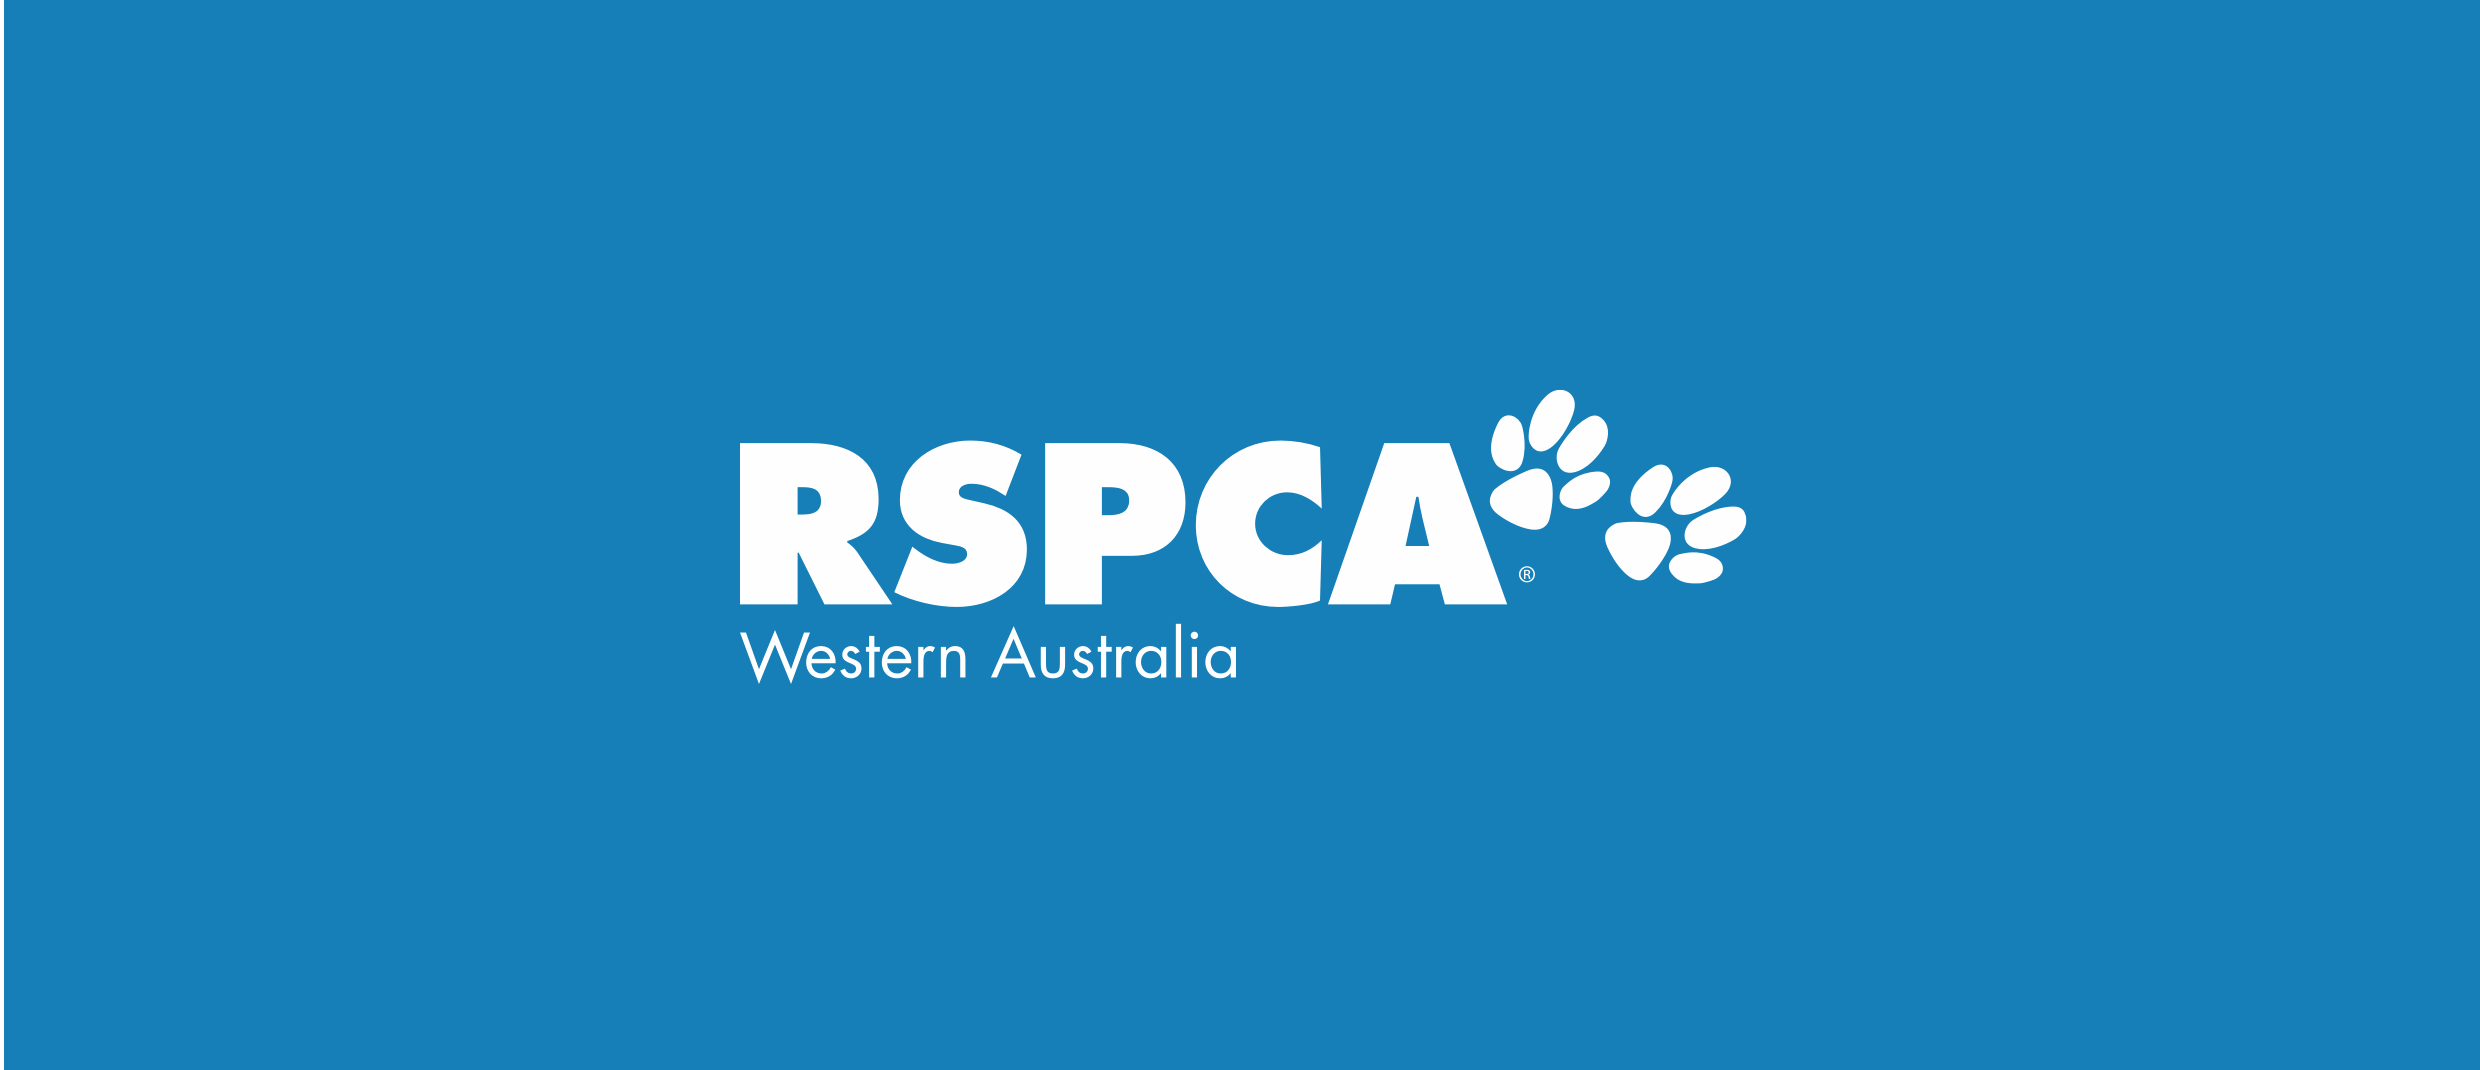 RSPCA Western Australia Puppy dog